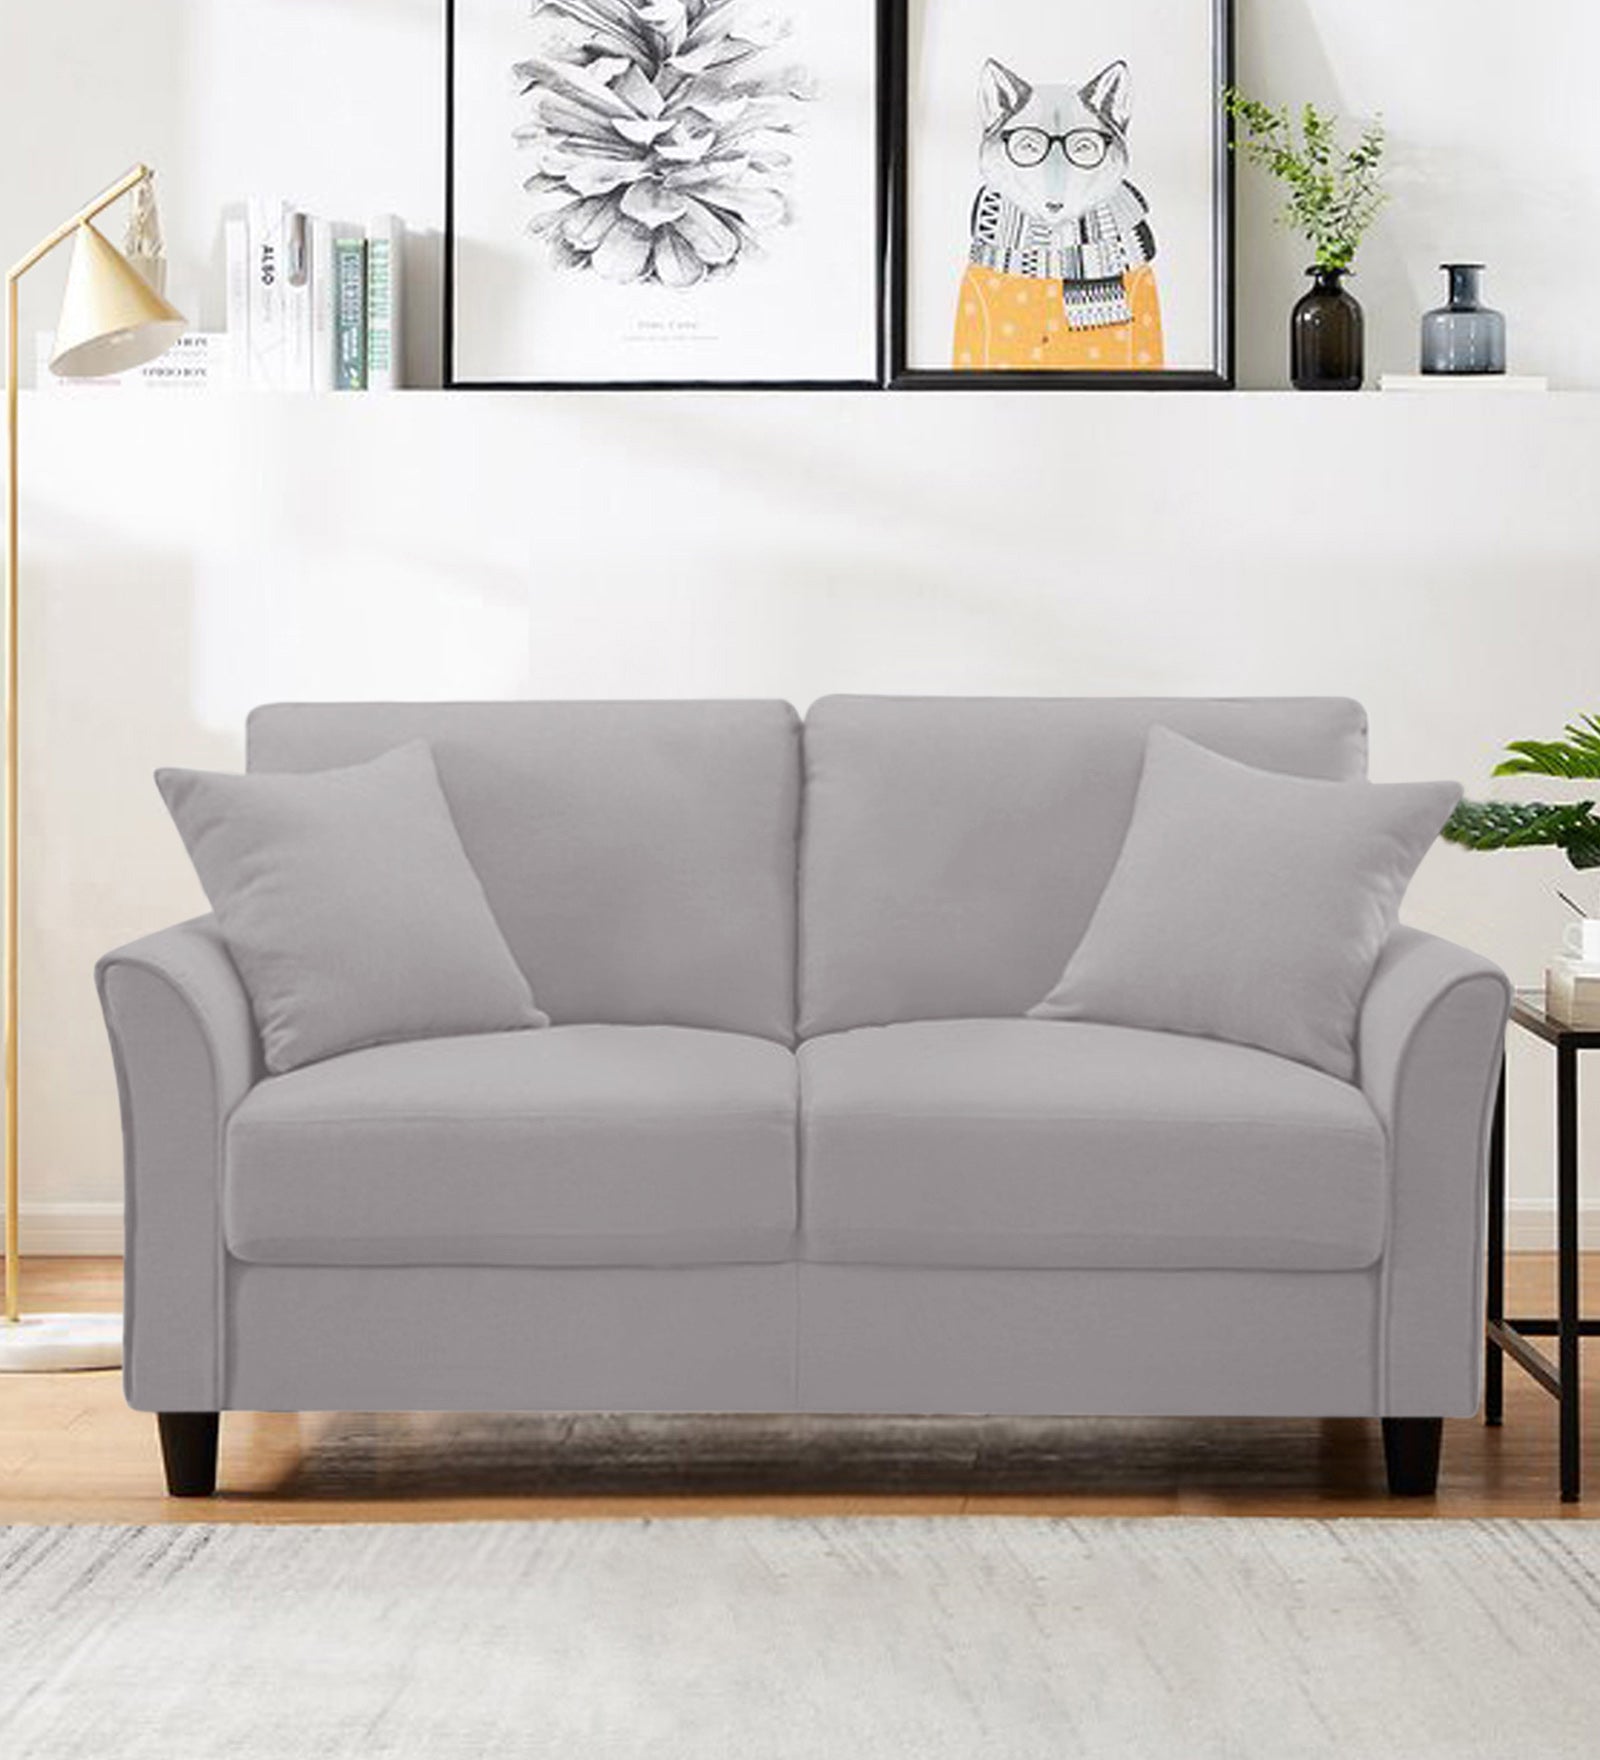 Daroo Velvet 2 Seater Sofa In Concrete Grey Colour